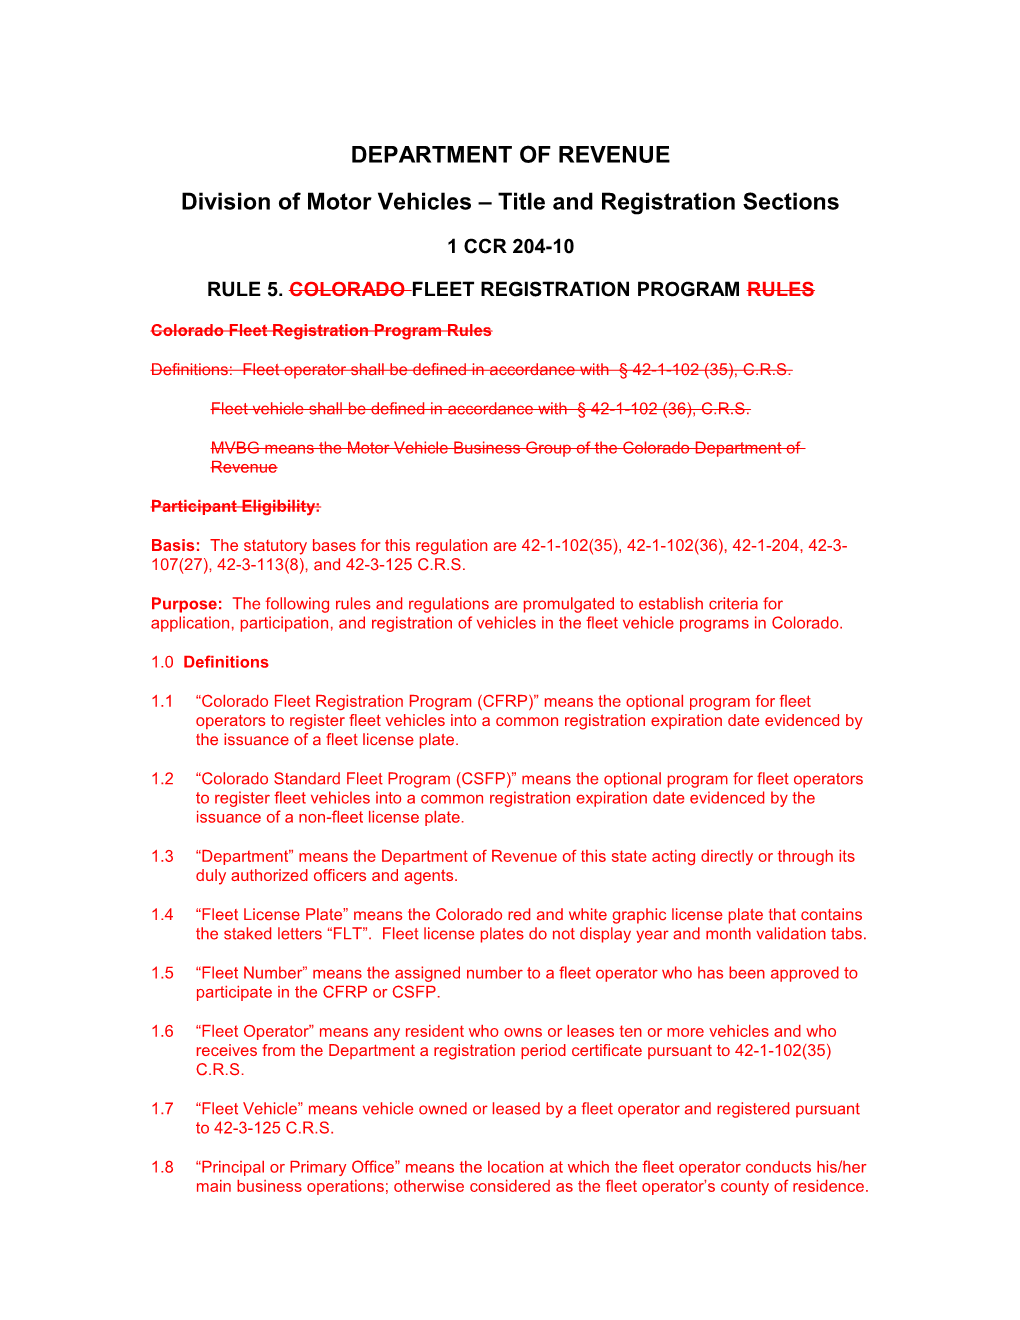 Colorado Fleet Registration Program Rules